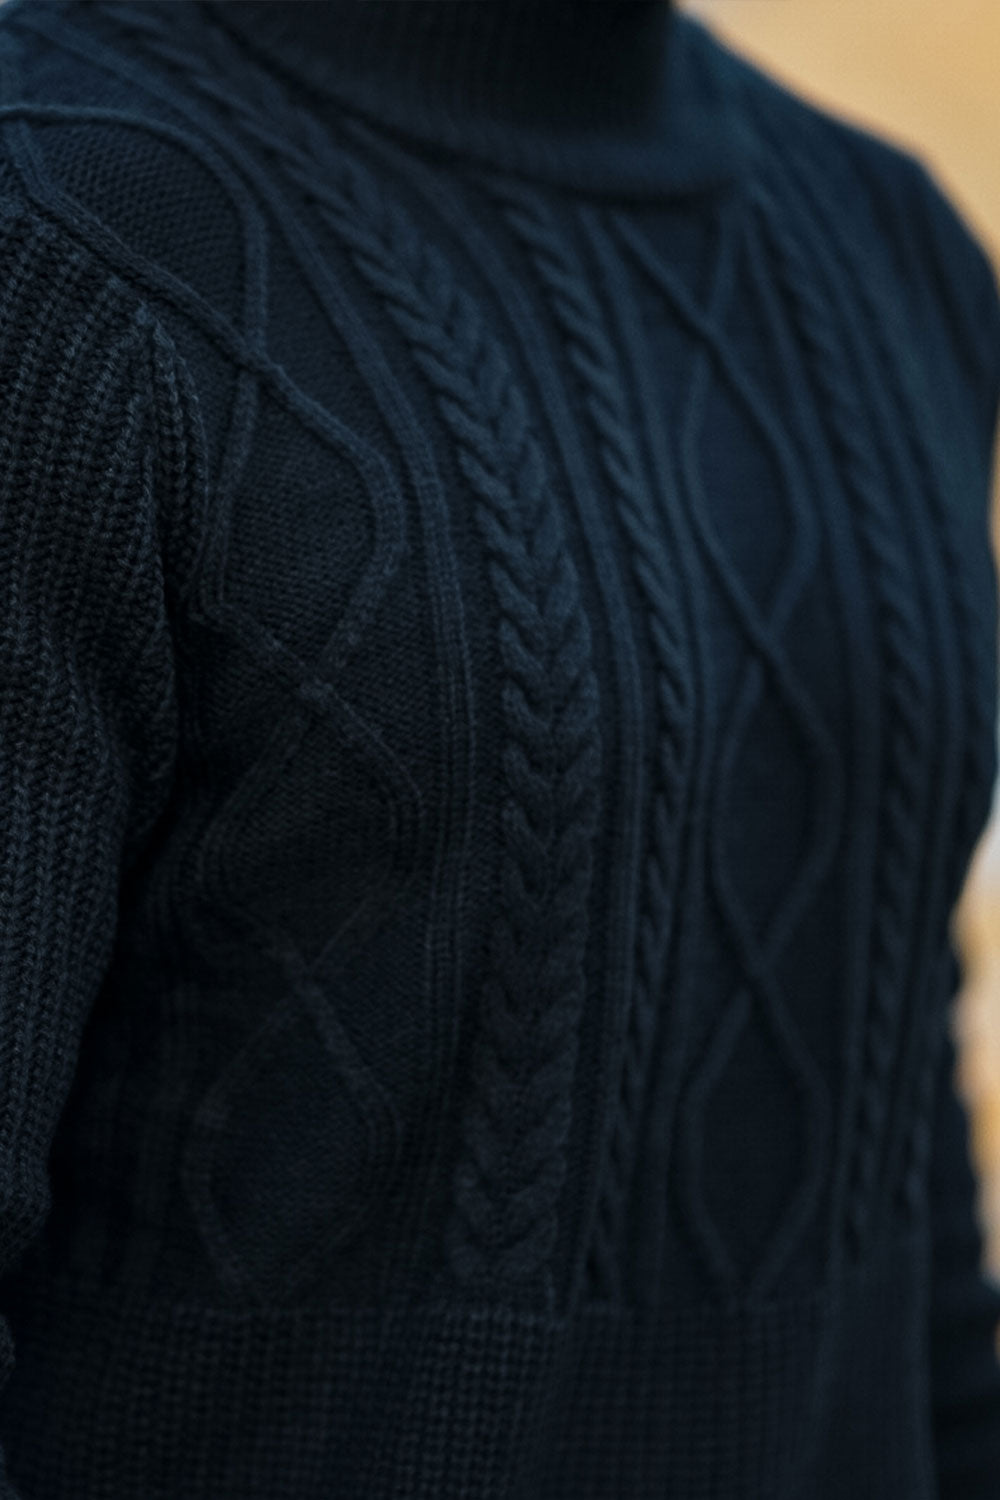 men's turtleneck sweater black